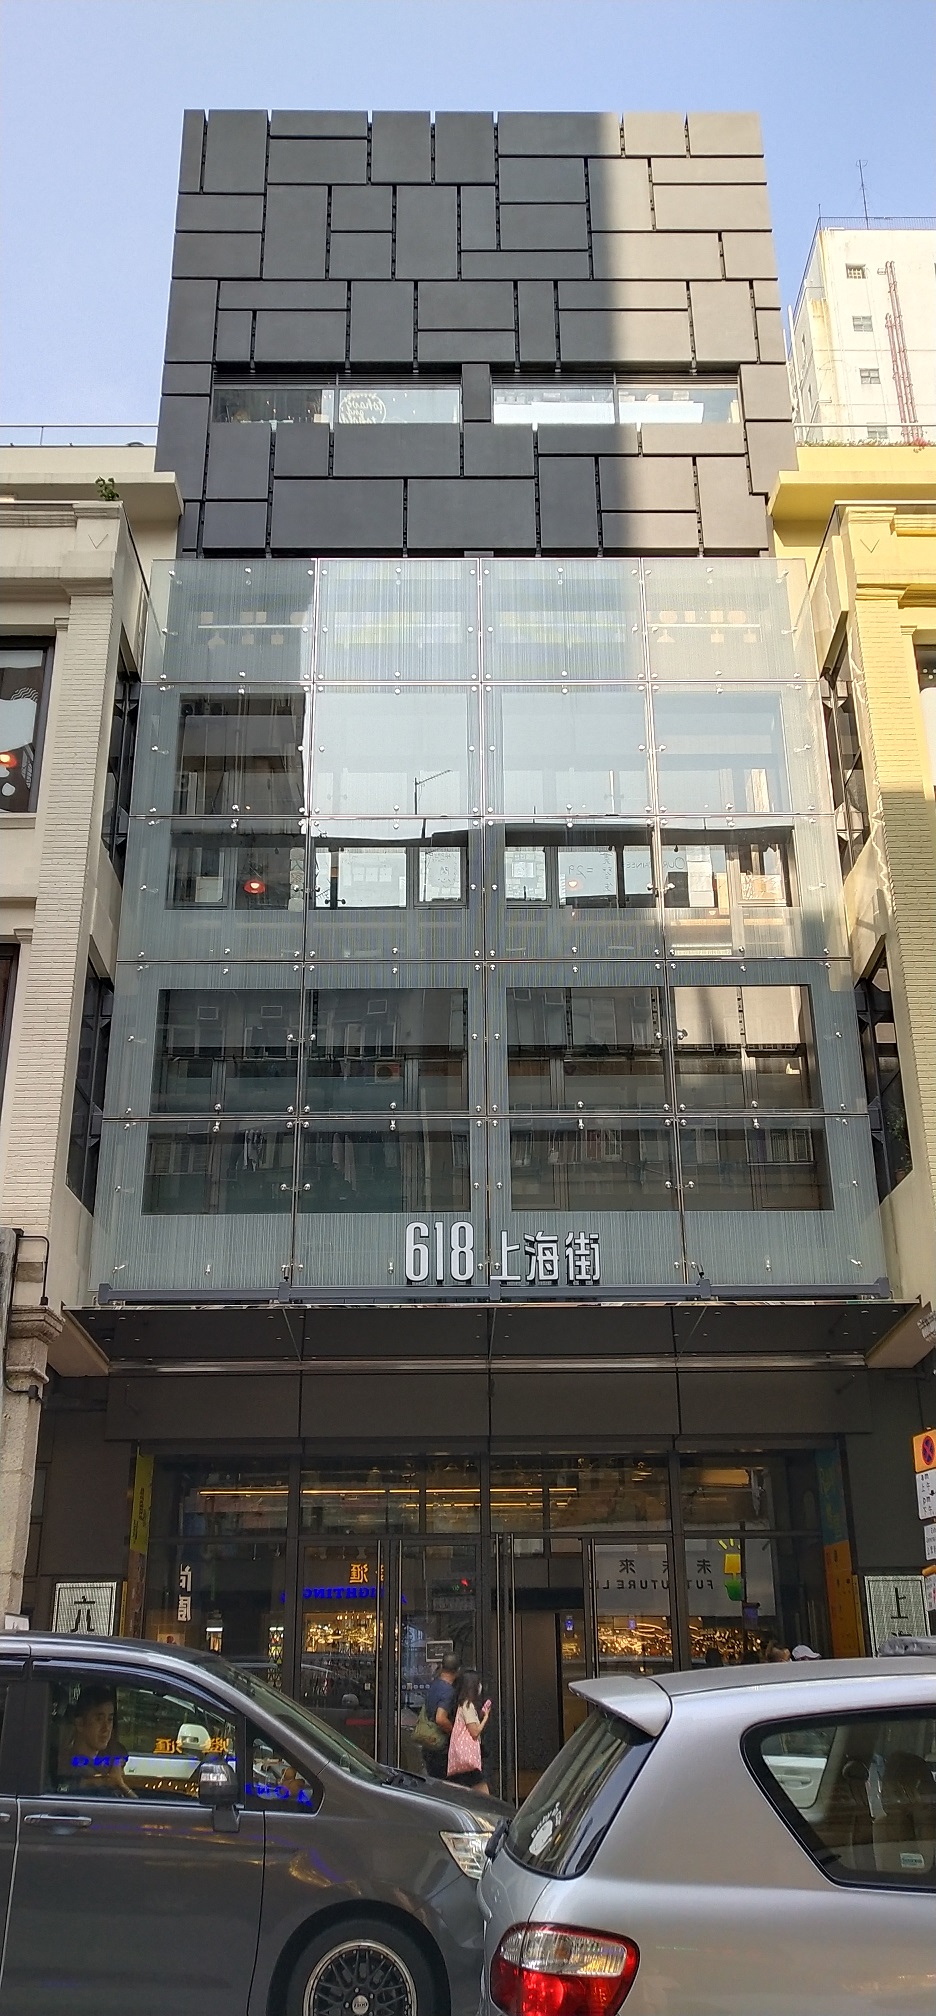 Modern entrance of Shanghai Street 618